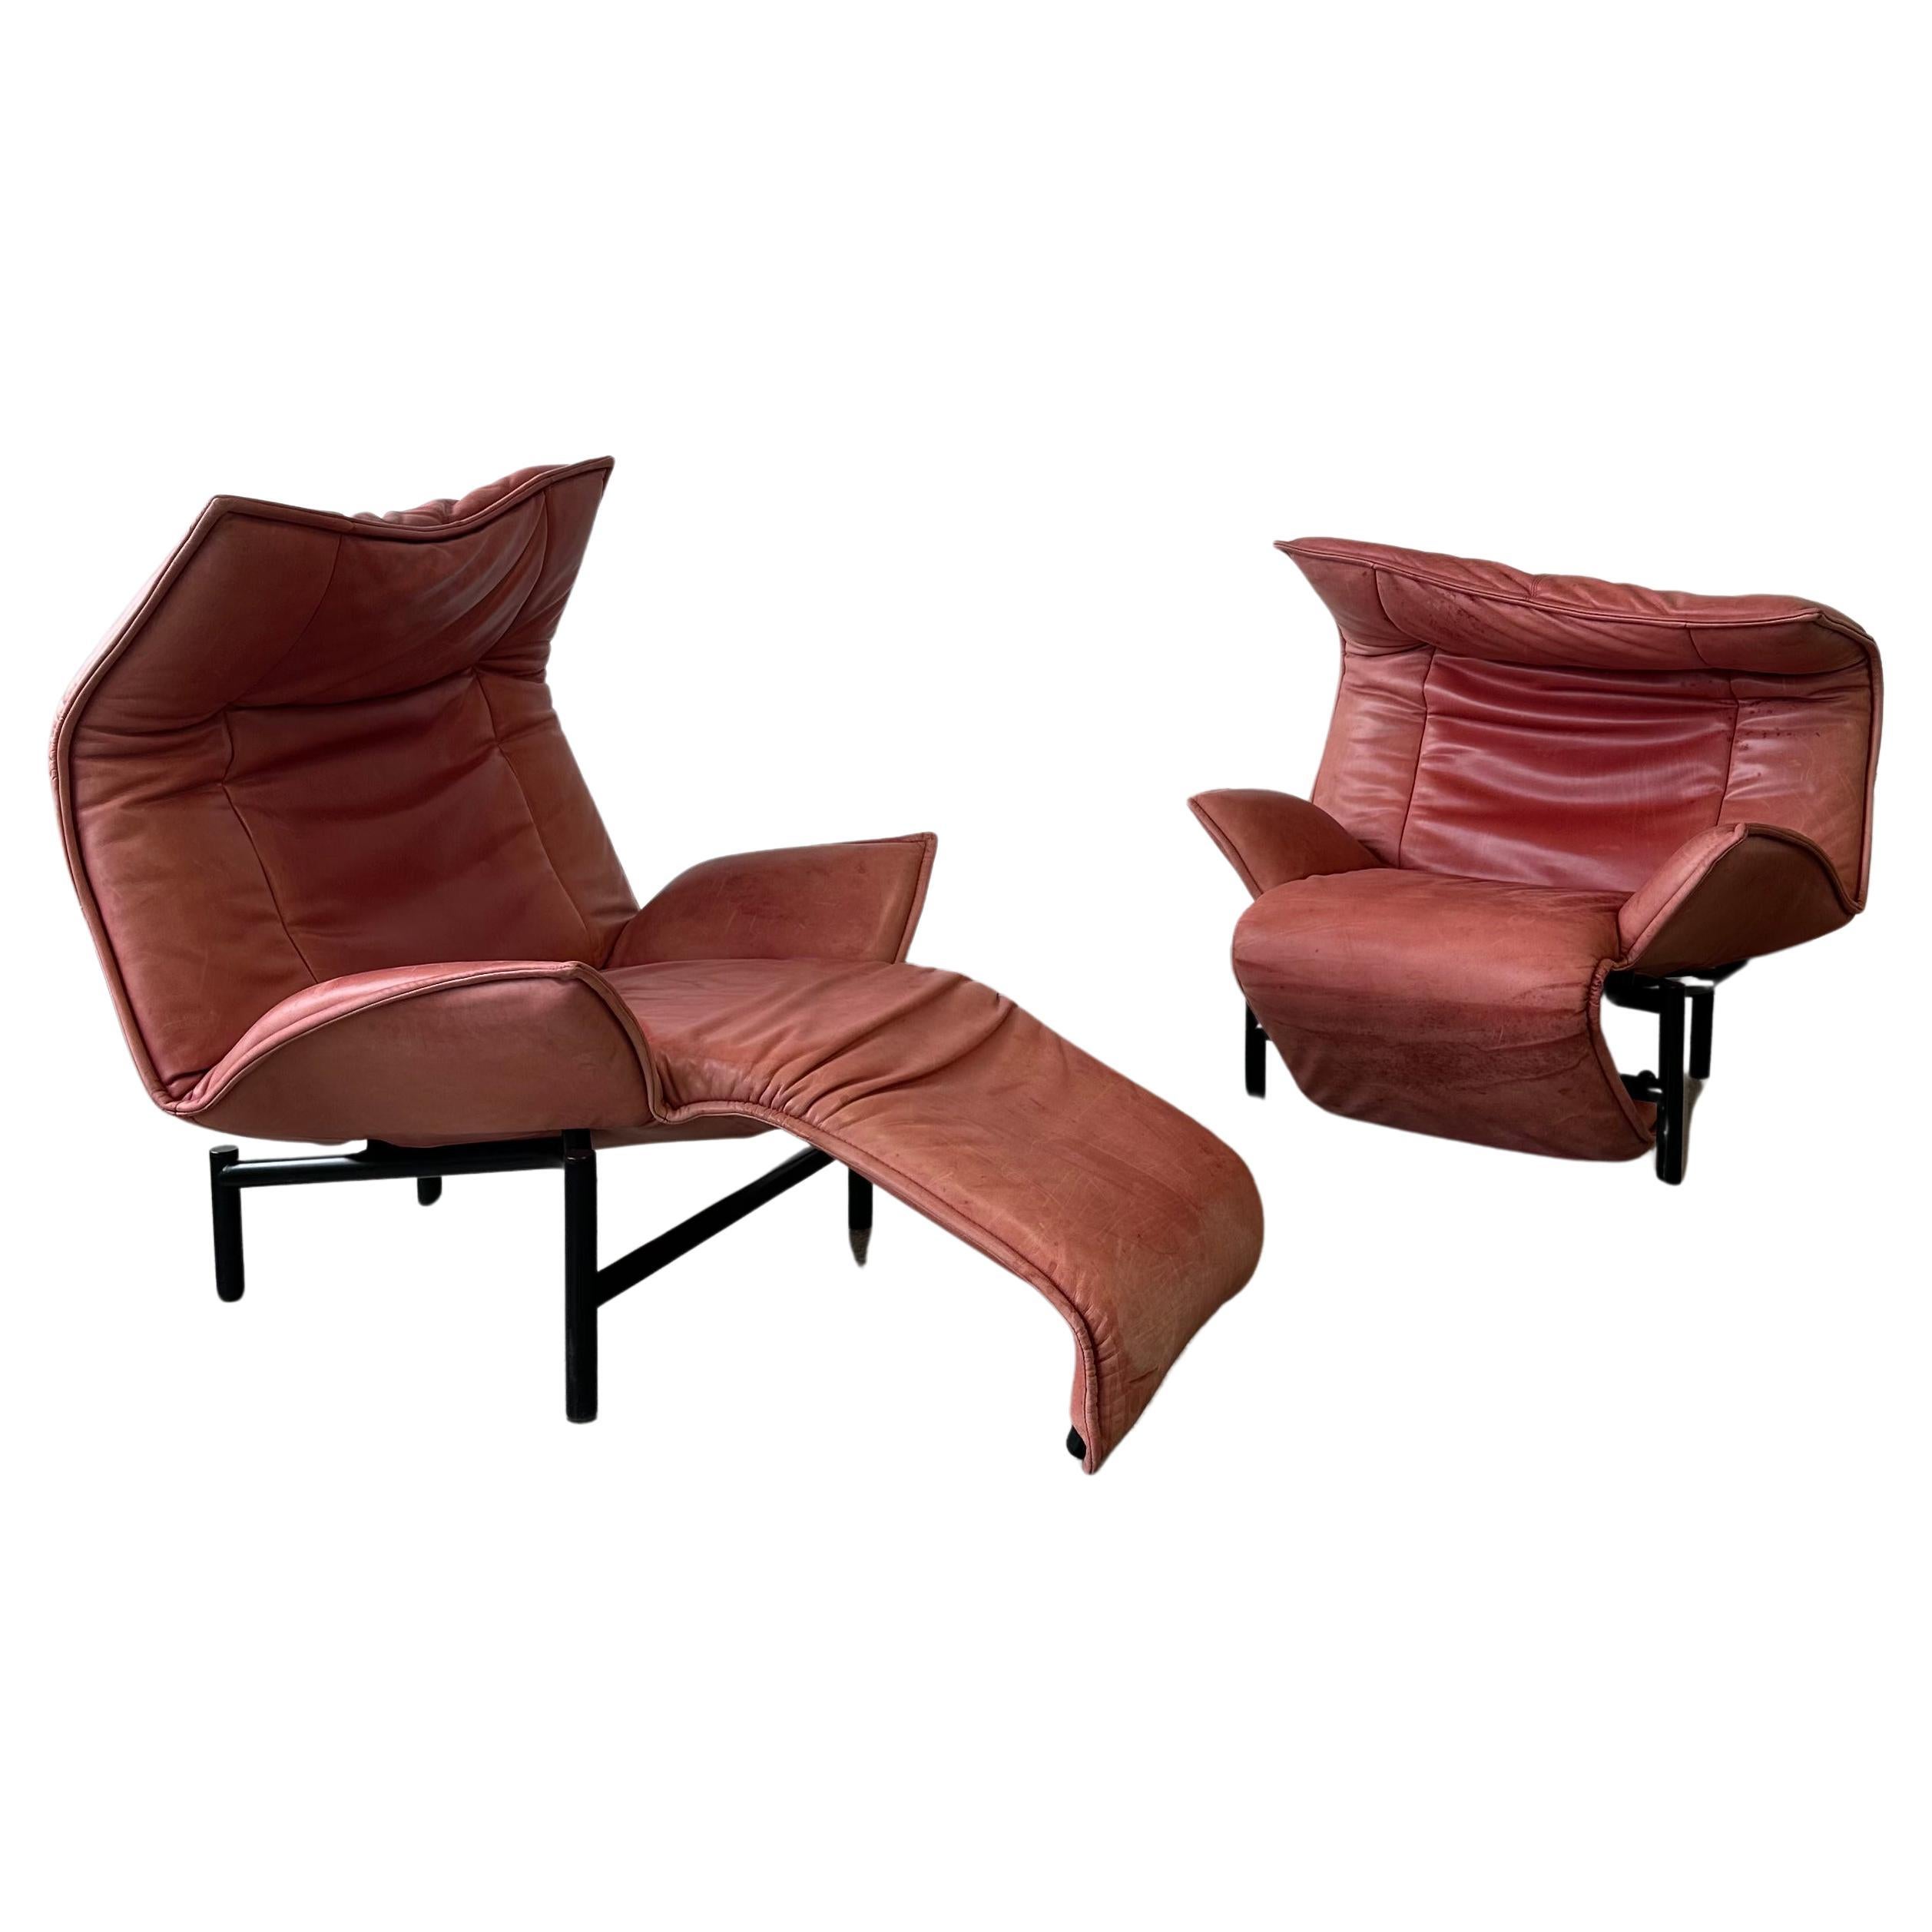 Vico Magistretti “Veranda” Chairs, a pair For Sale